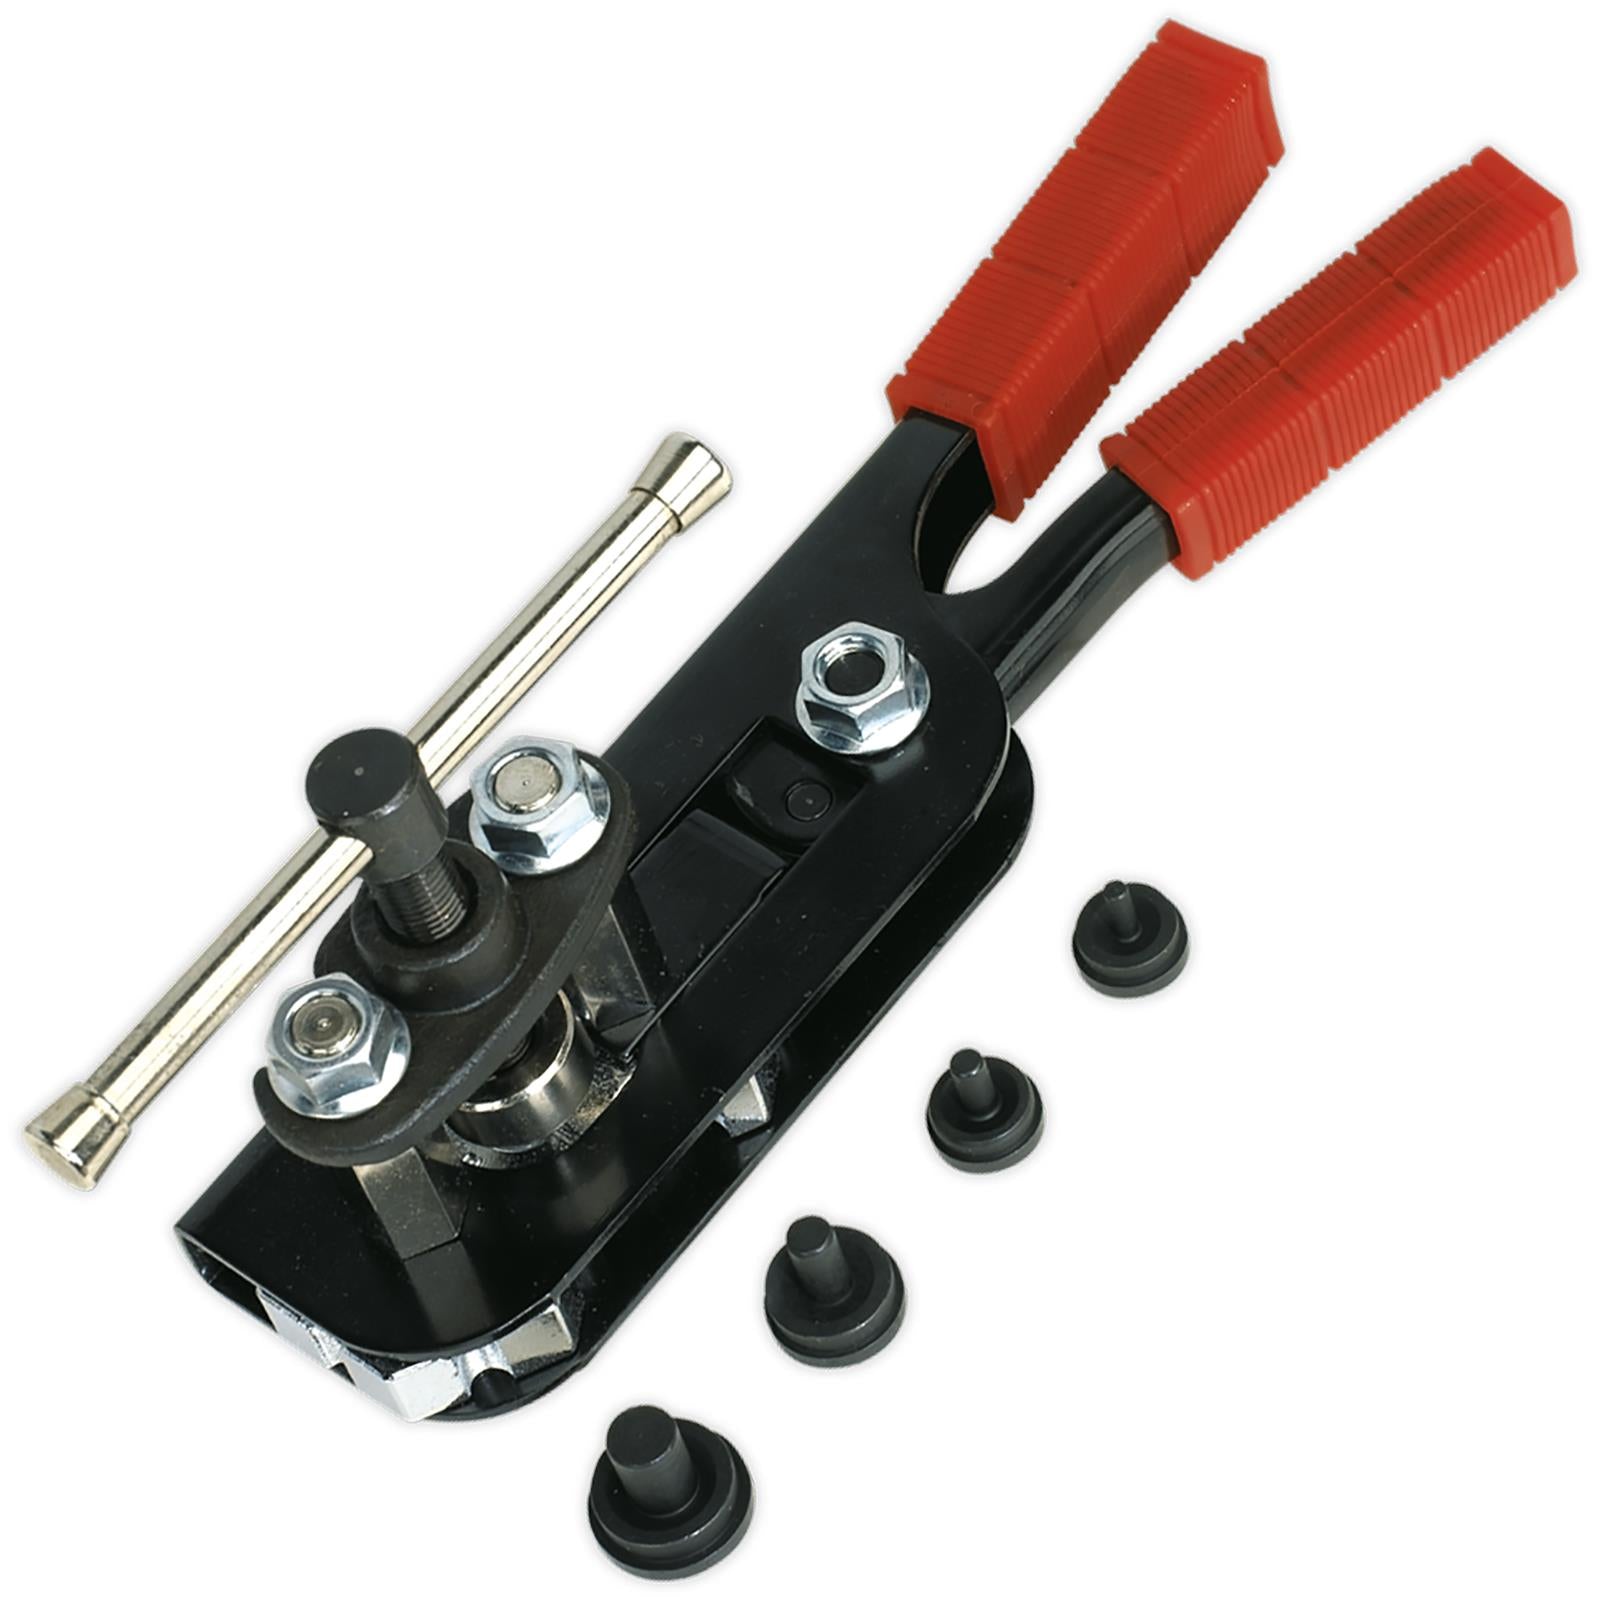 Sealey Brake Pipe Flaring Tool Kit Single Double Flares Copper Tubing Plier Type